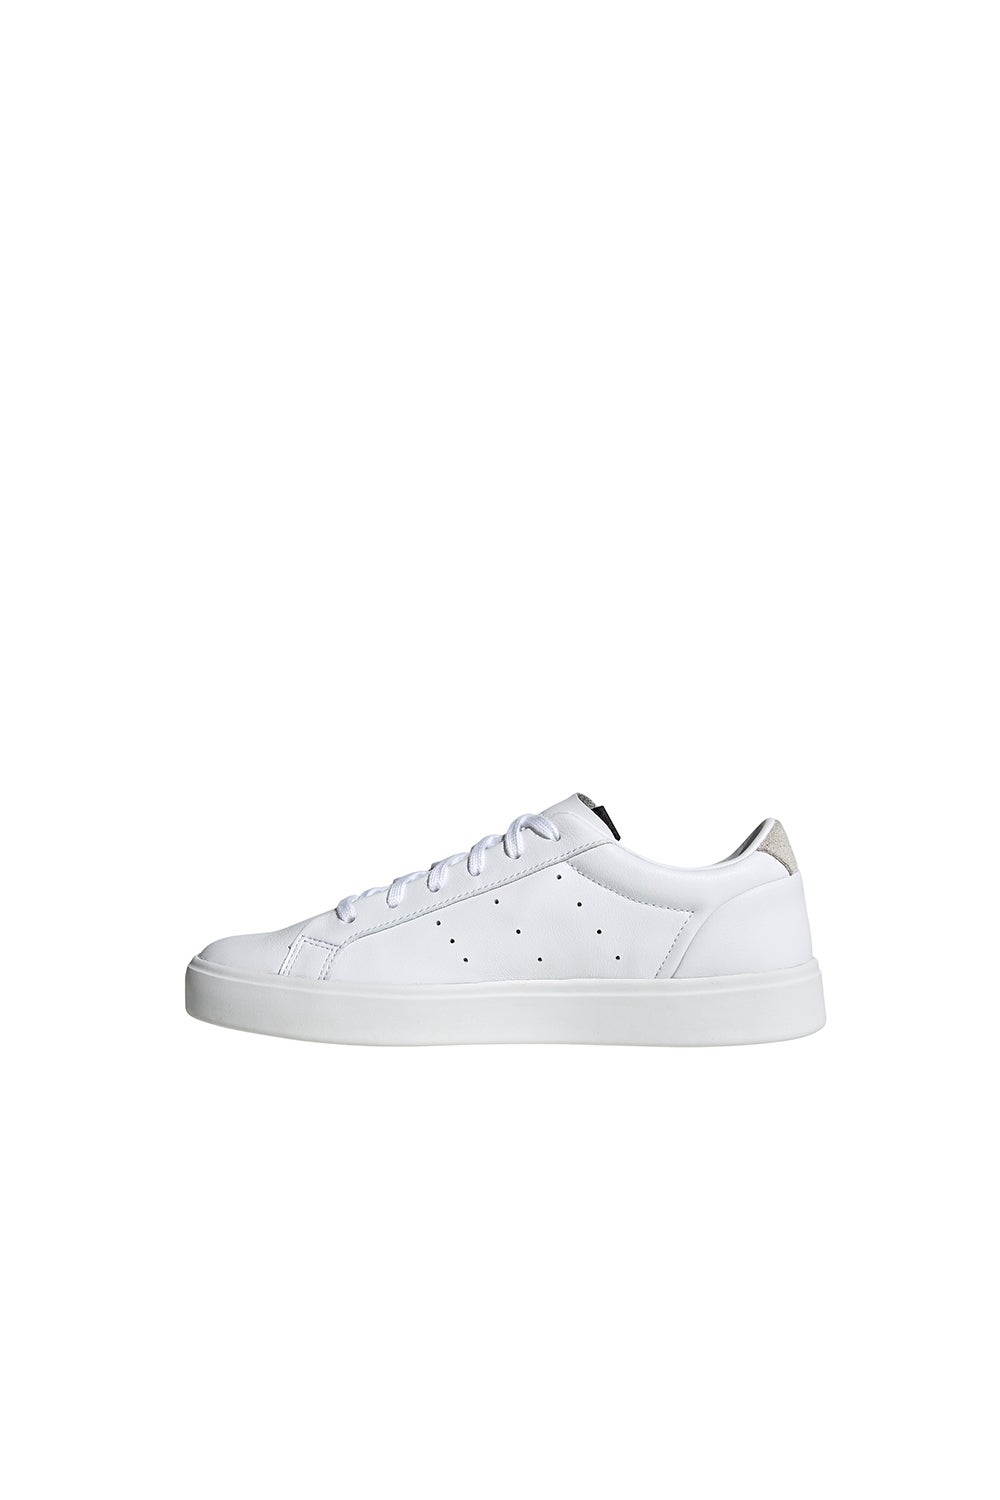 adidas Sleek FTWR White/Crystal White